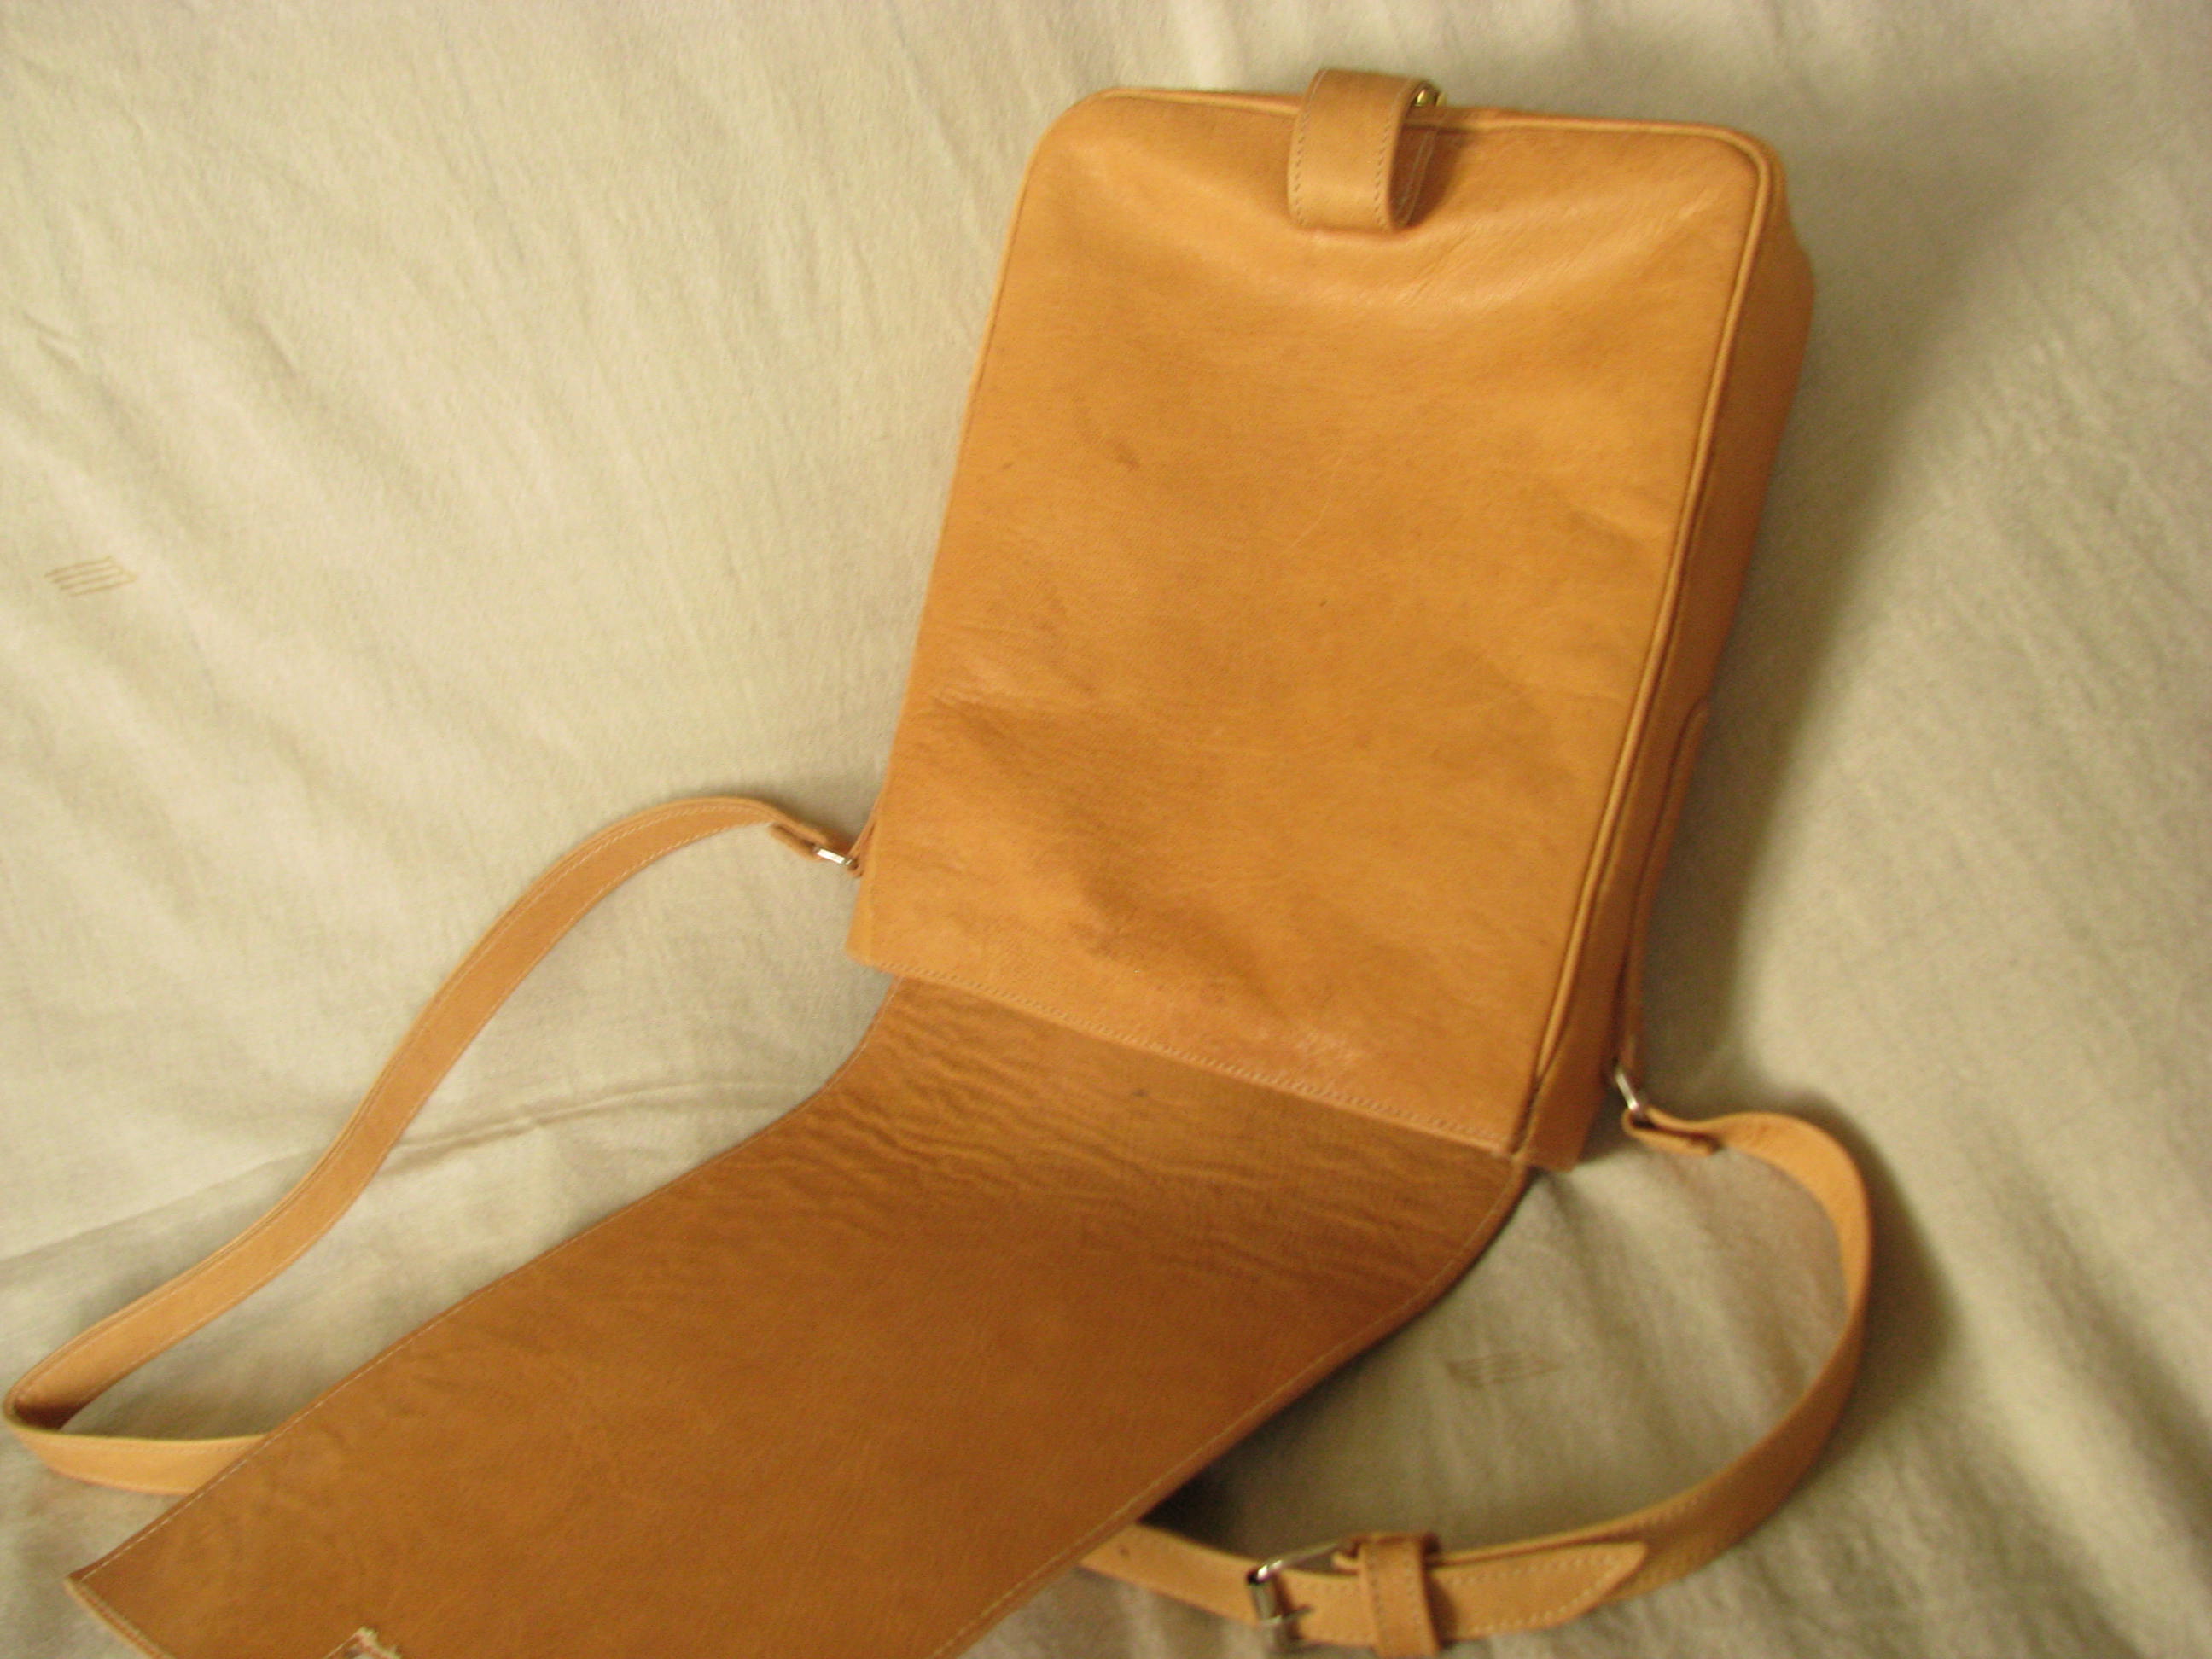 Gundara - messenger bag for men - genuine leather - made in Afghanistan - fair trade